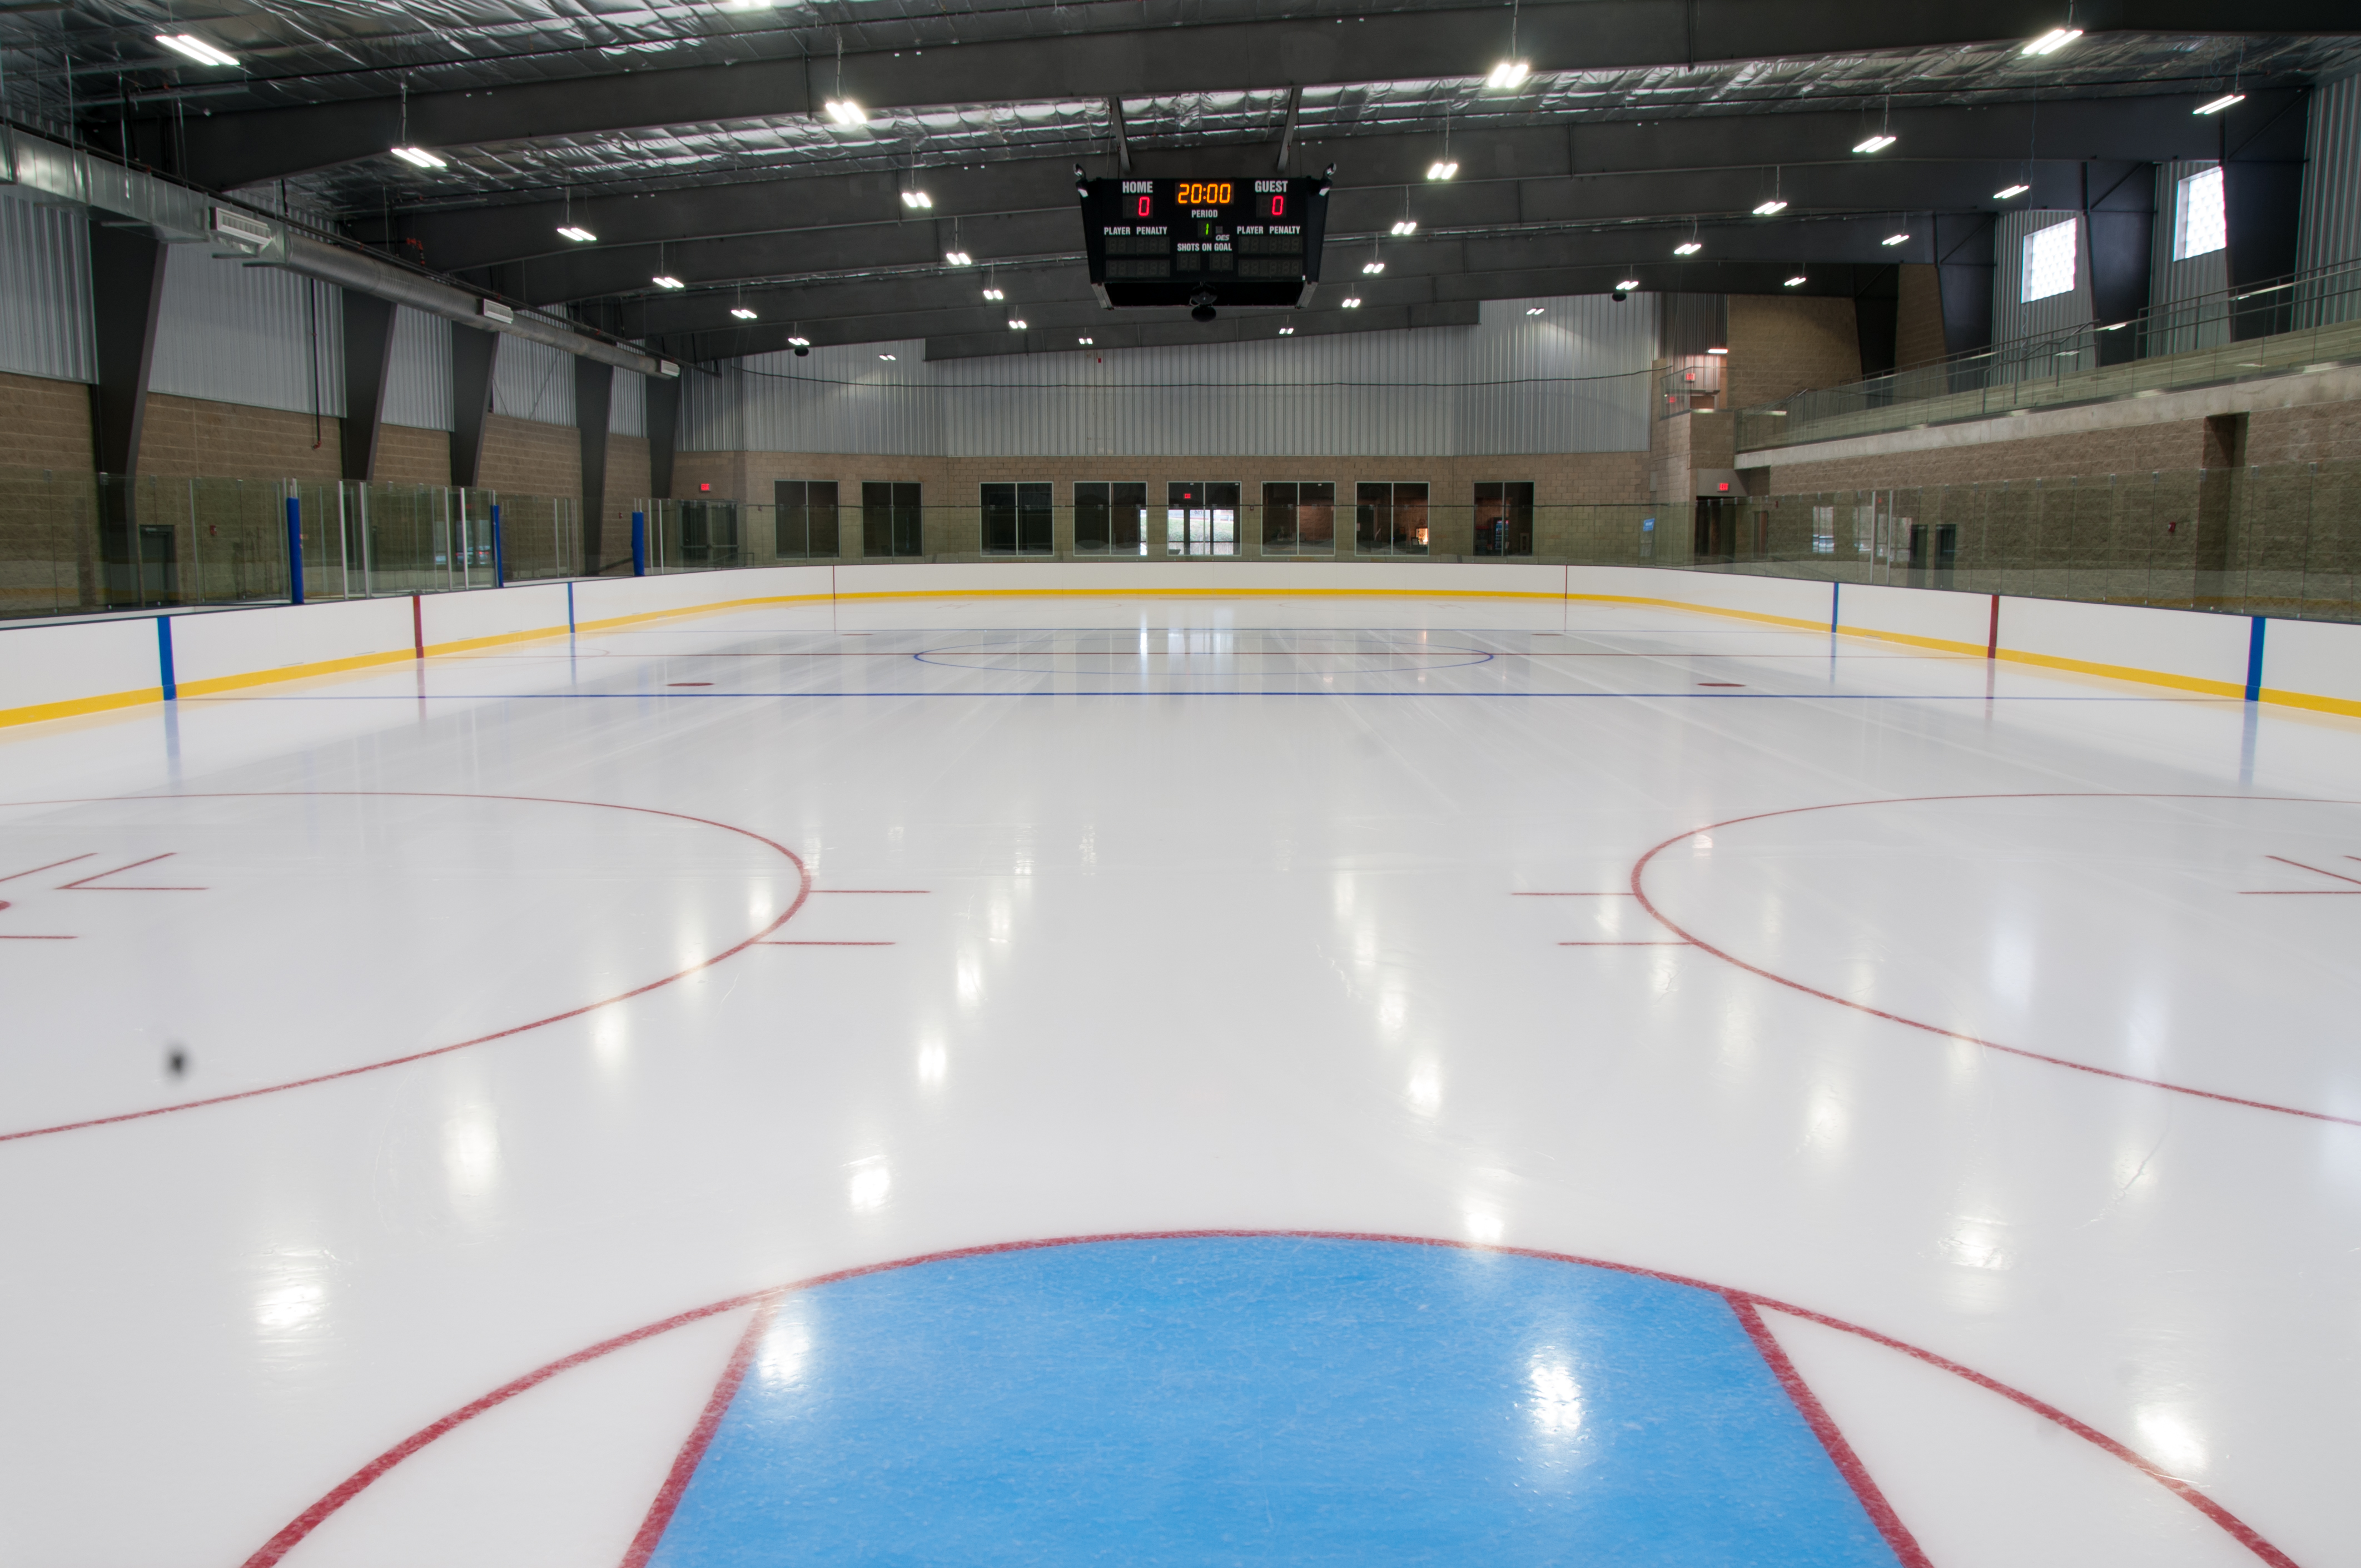 Home - Centre Ice